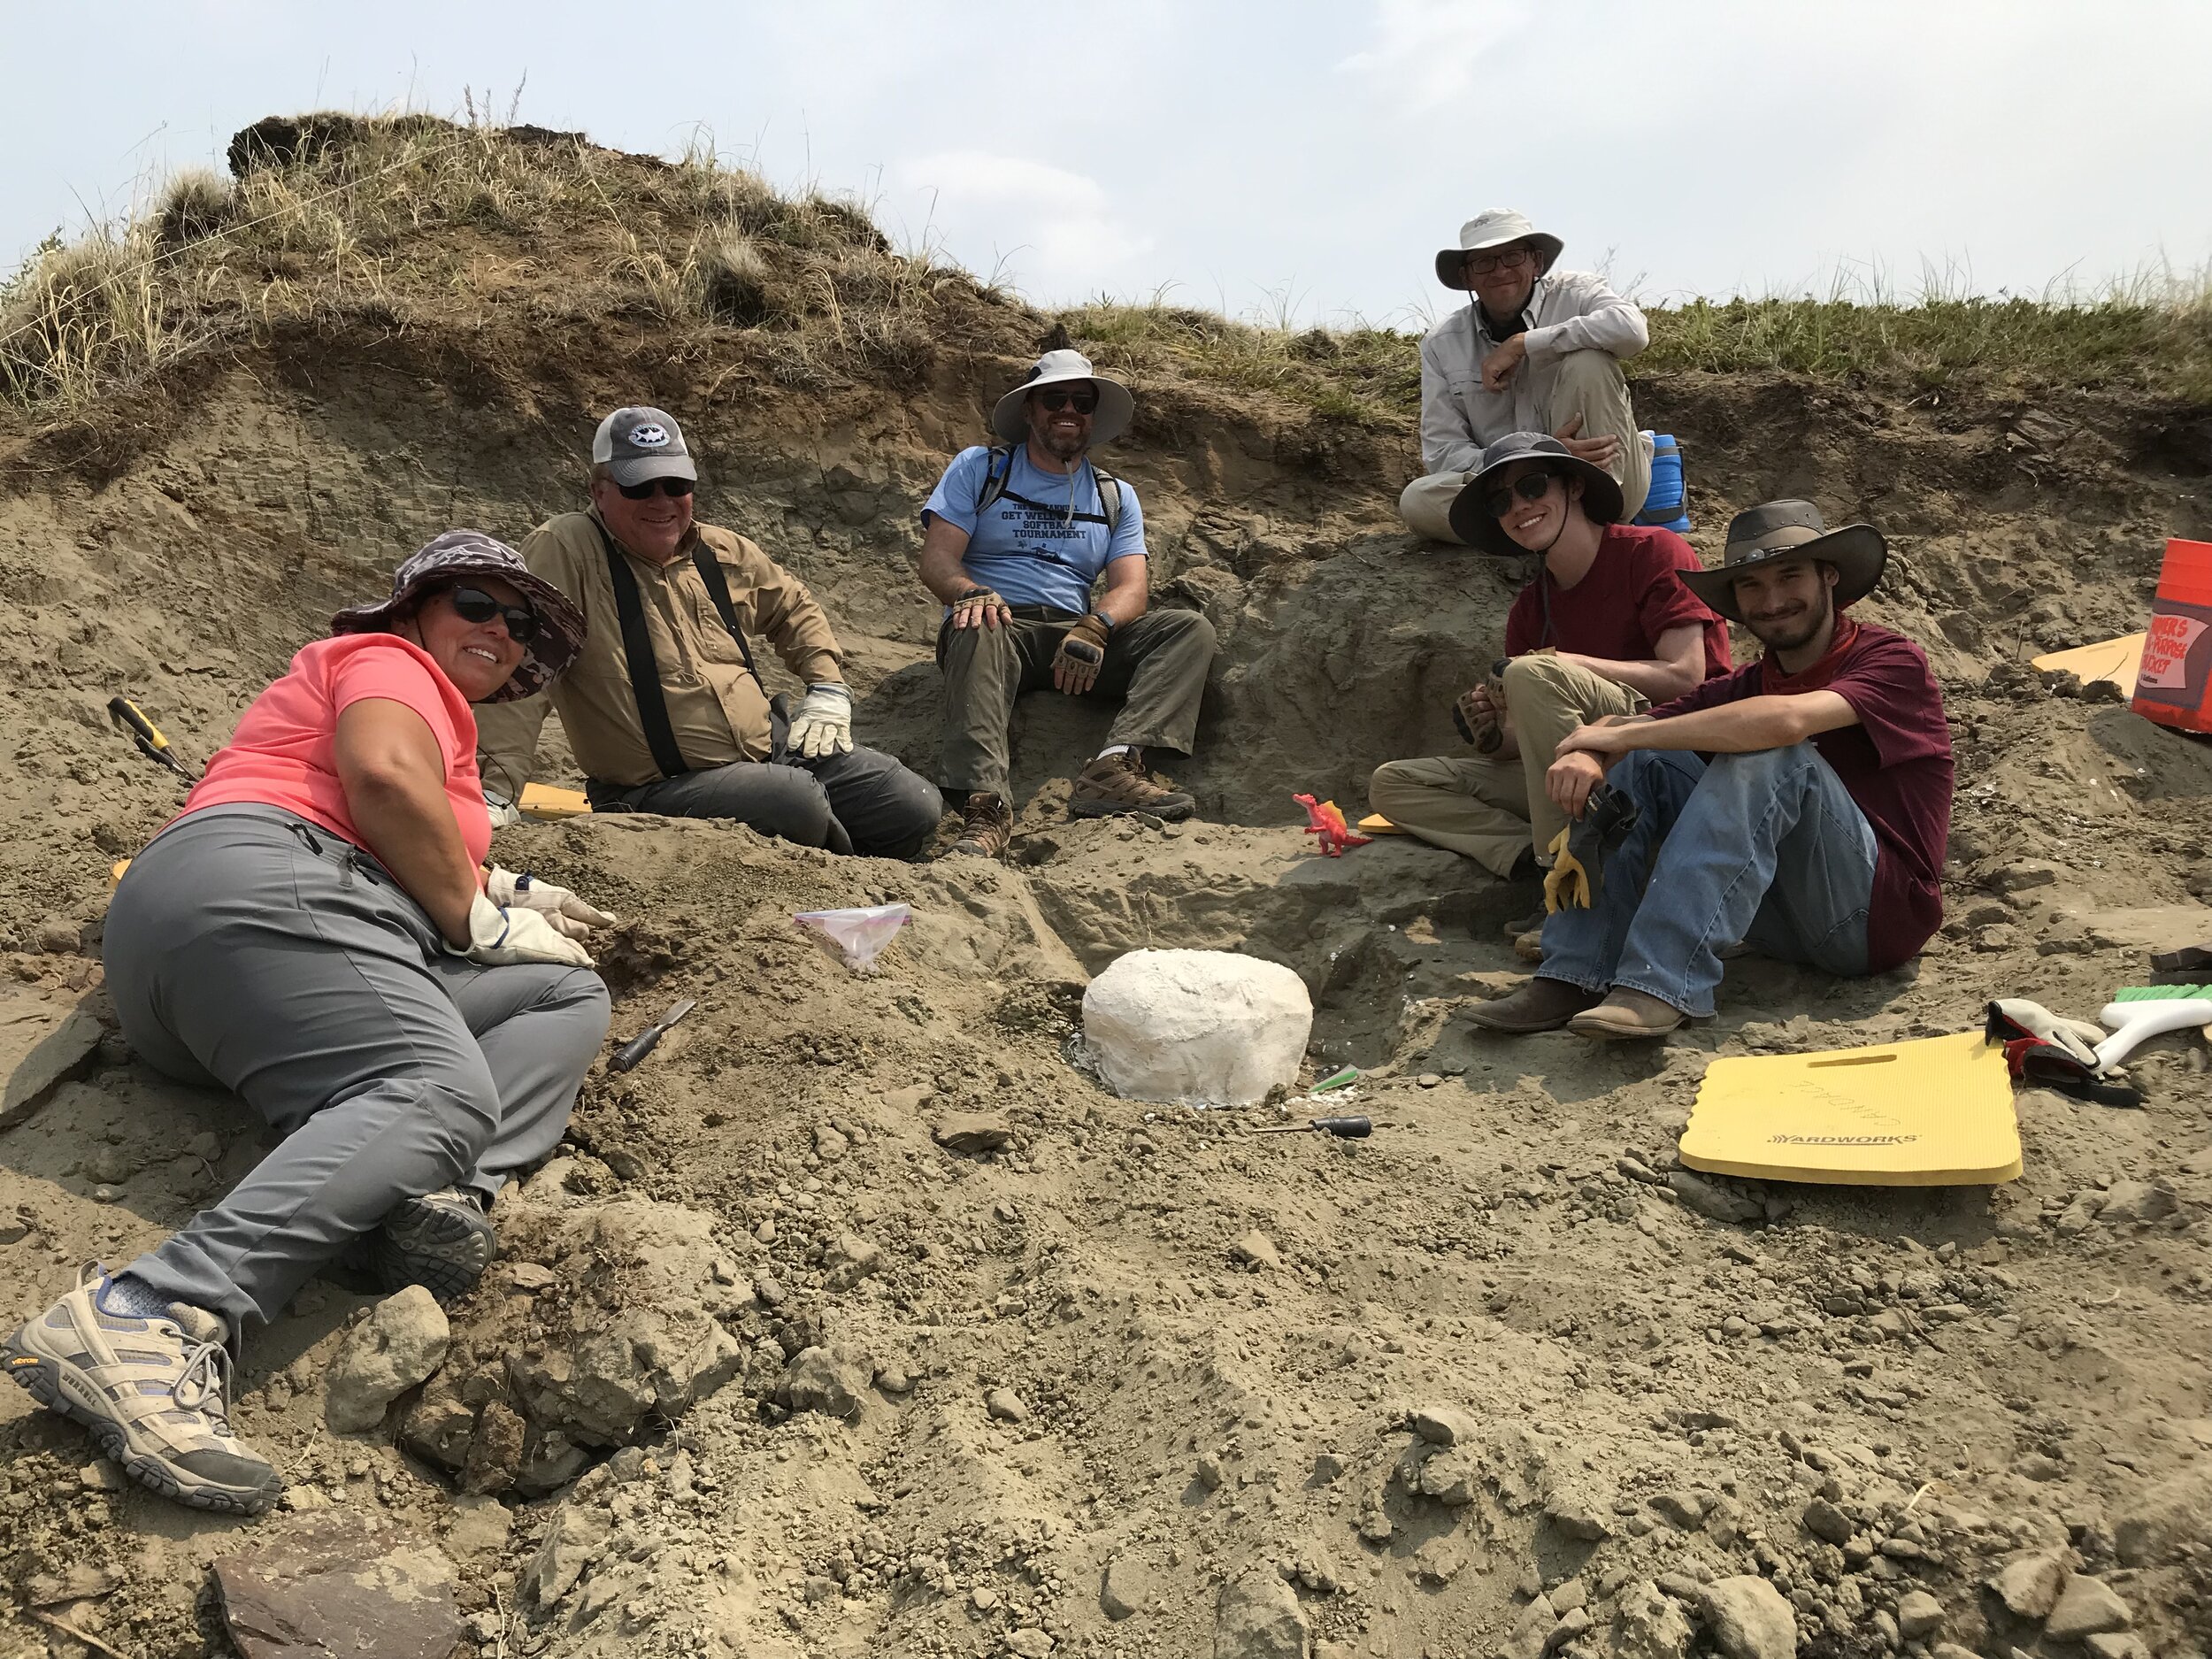 Digging up dinosaur bones, triceratops